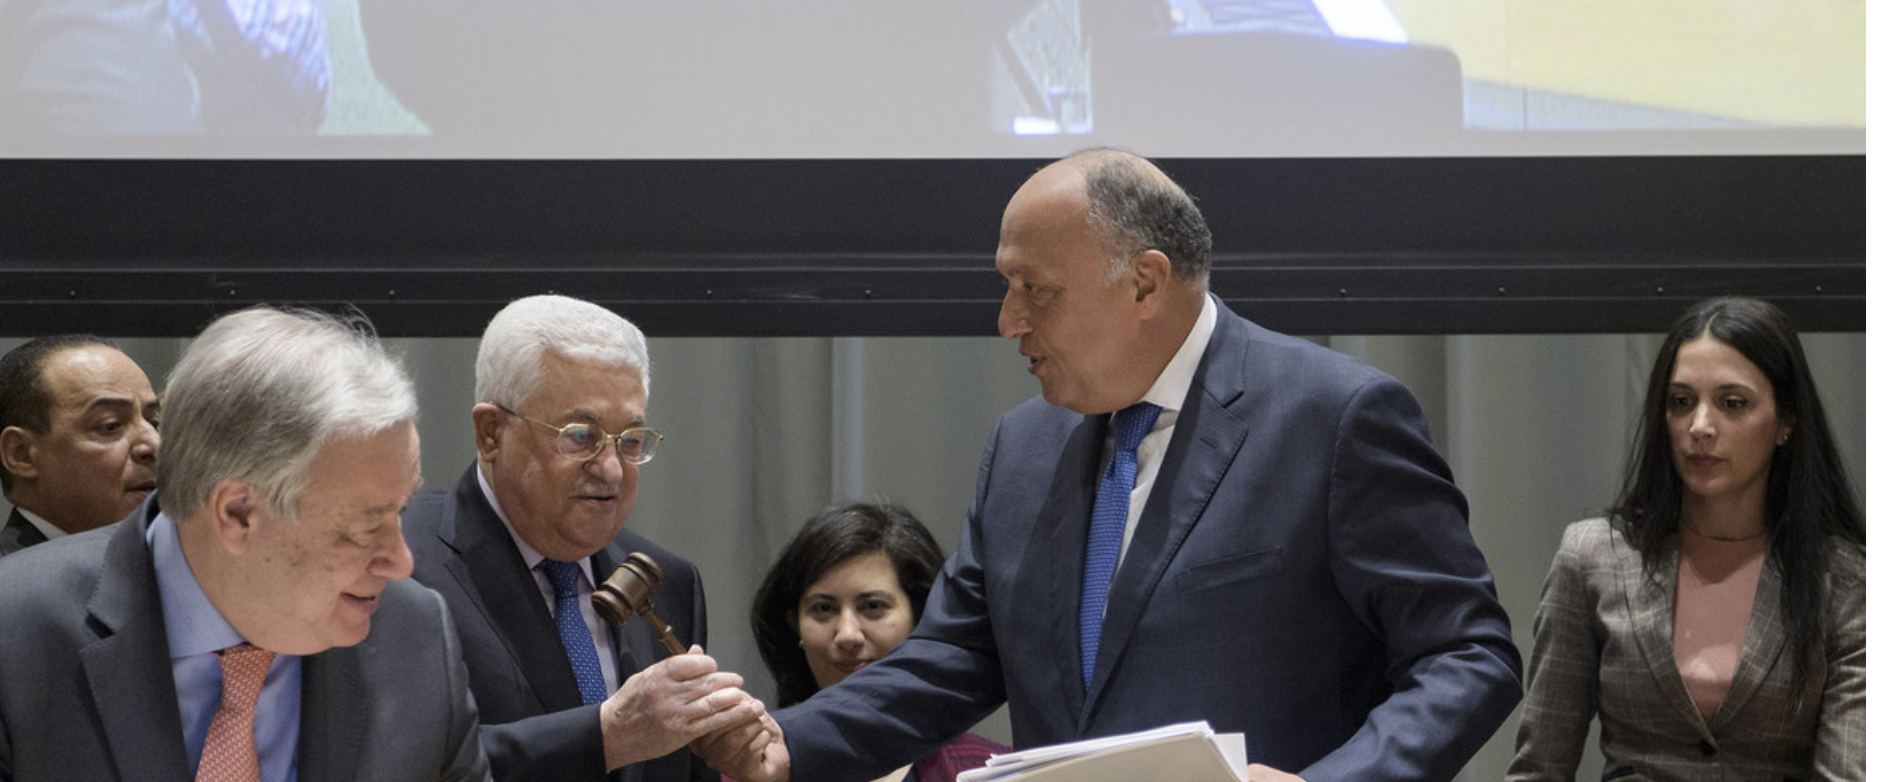 Palestinian Leader at UN